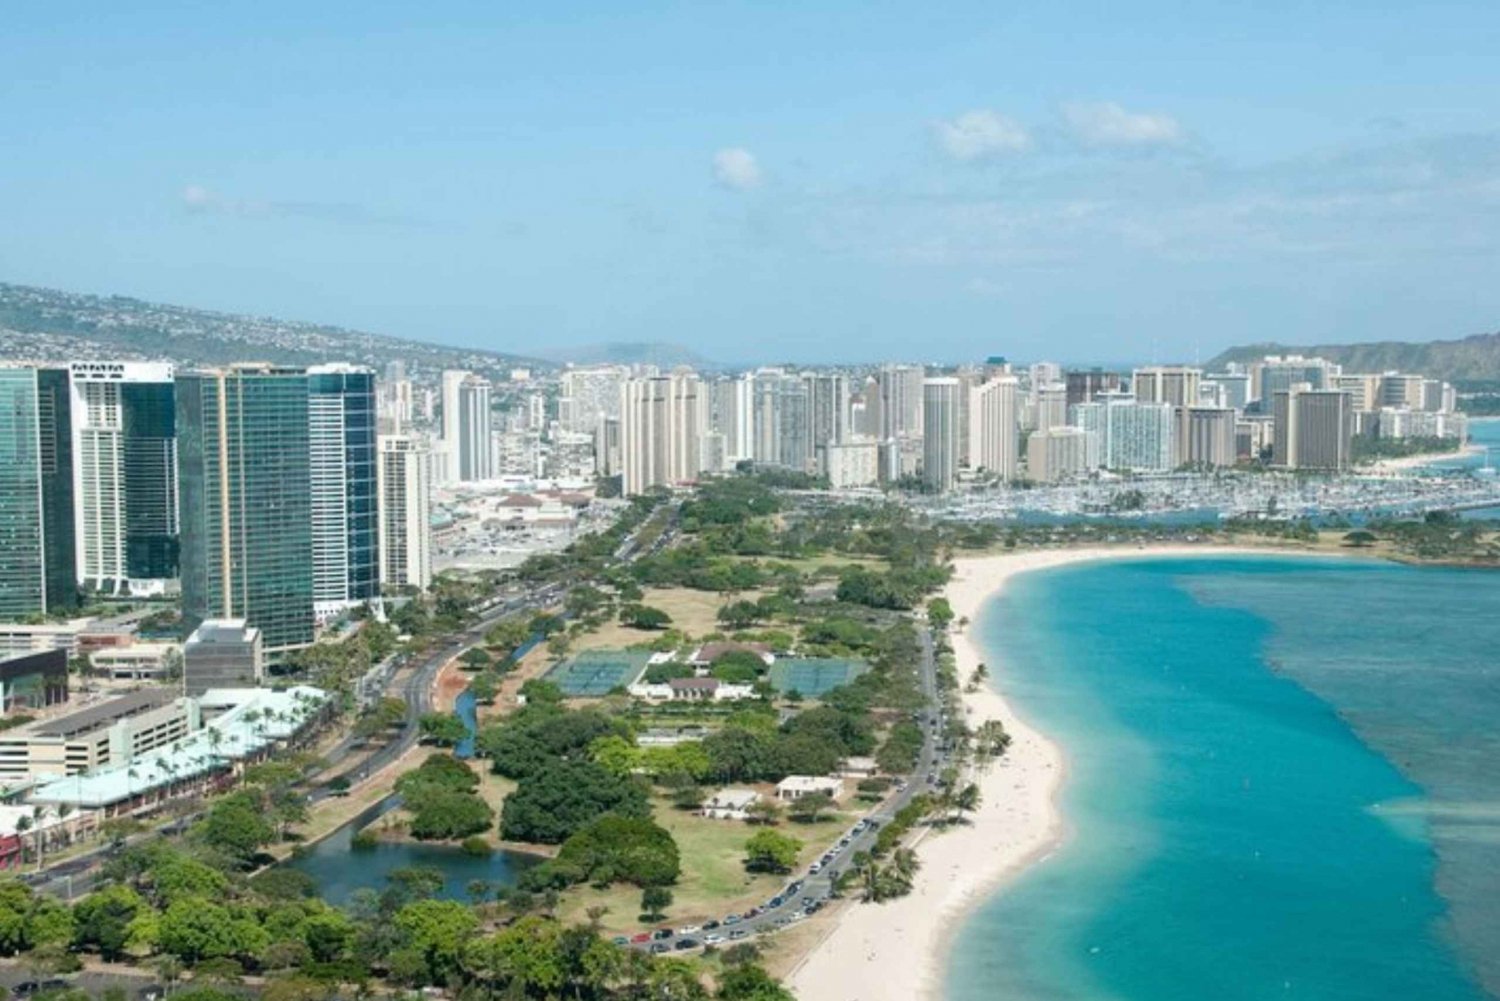 Honolulu: privérondleiding op maat met een lokale gids